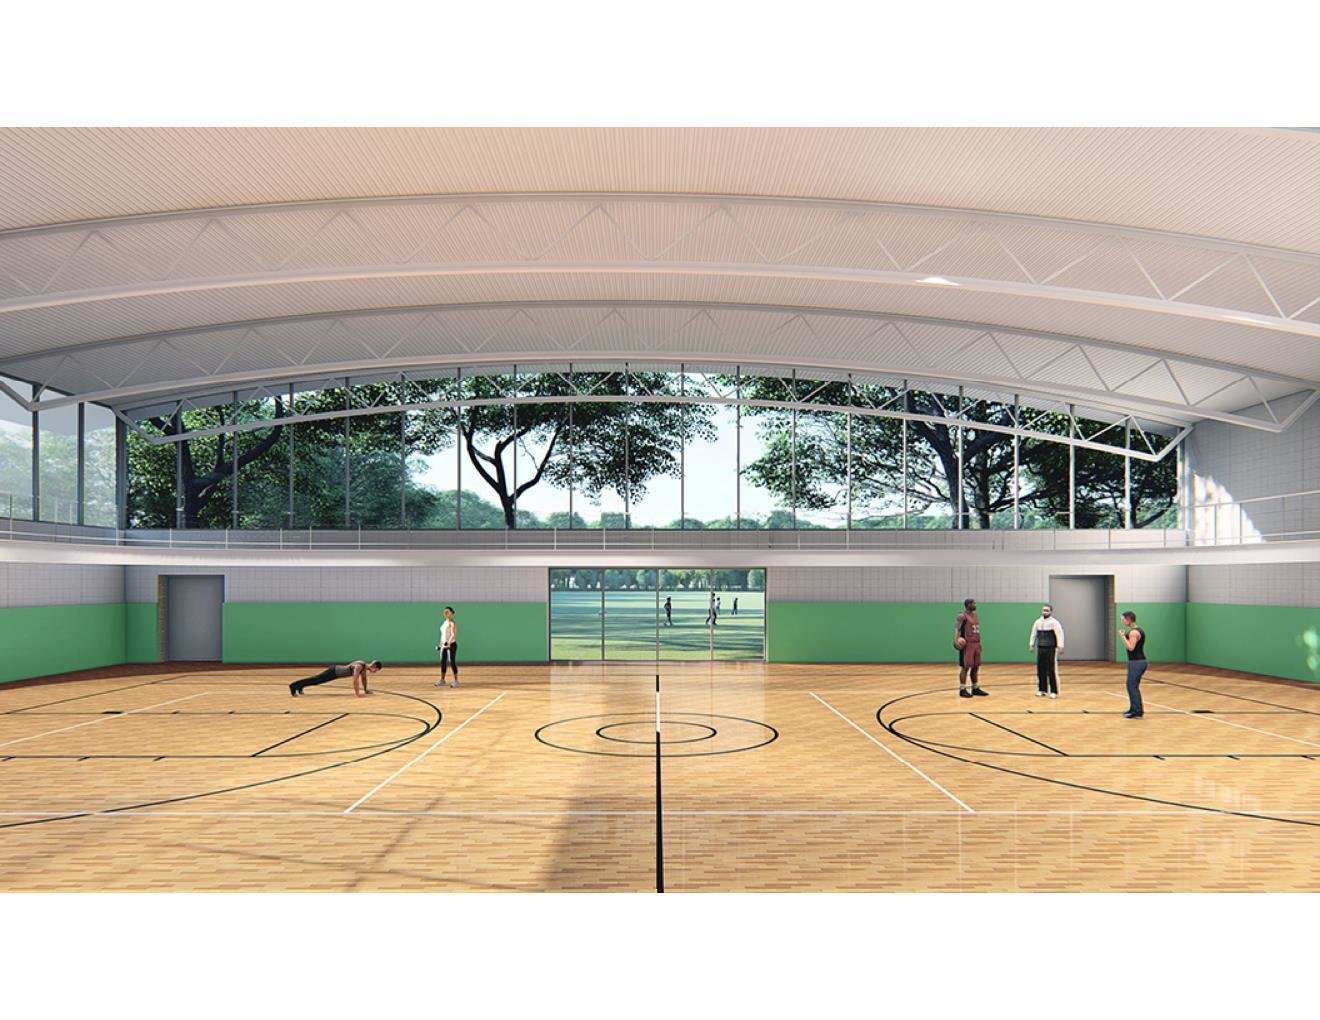 04 tskp eastern greenwich civic center rendering interior gymnasium 1400 0x0x1320x1020 q85